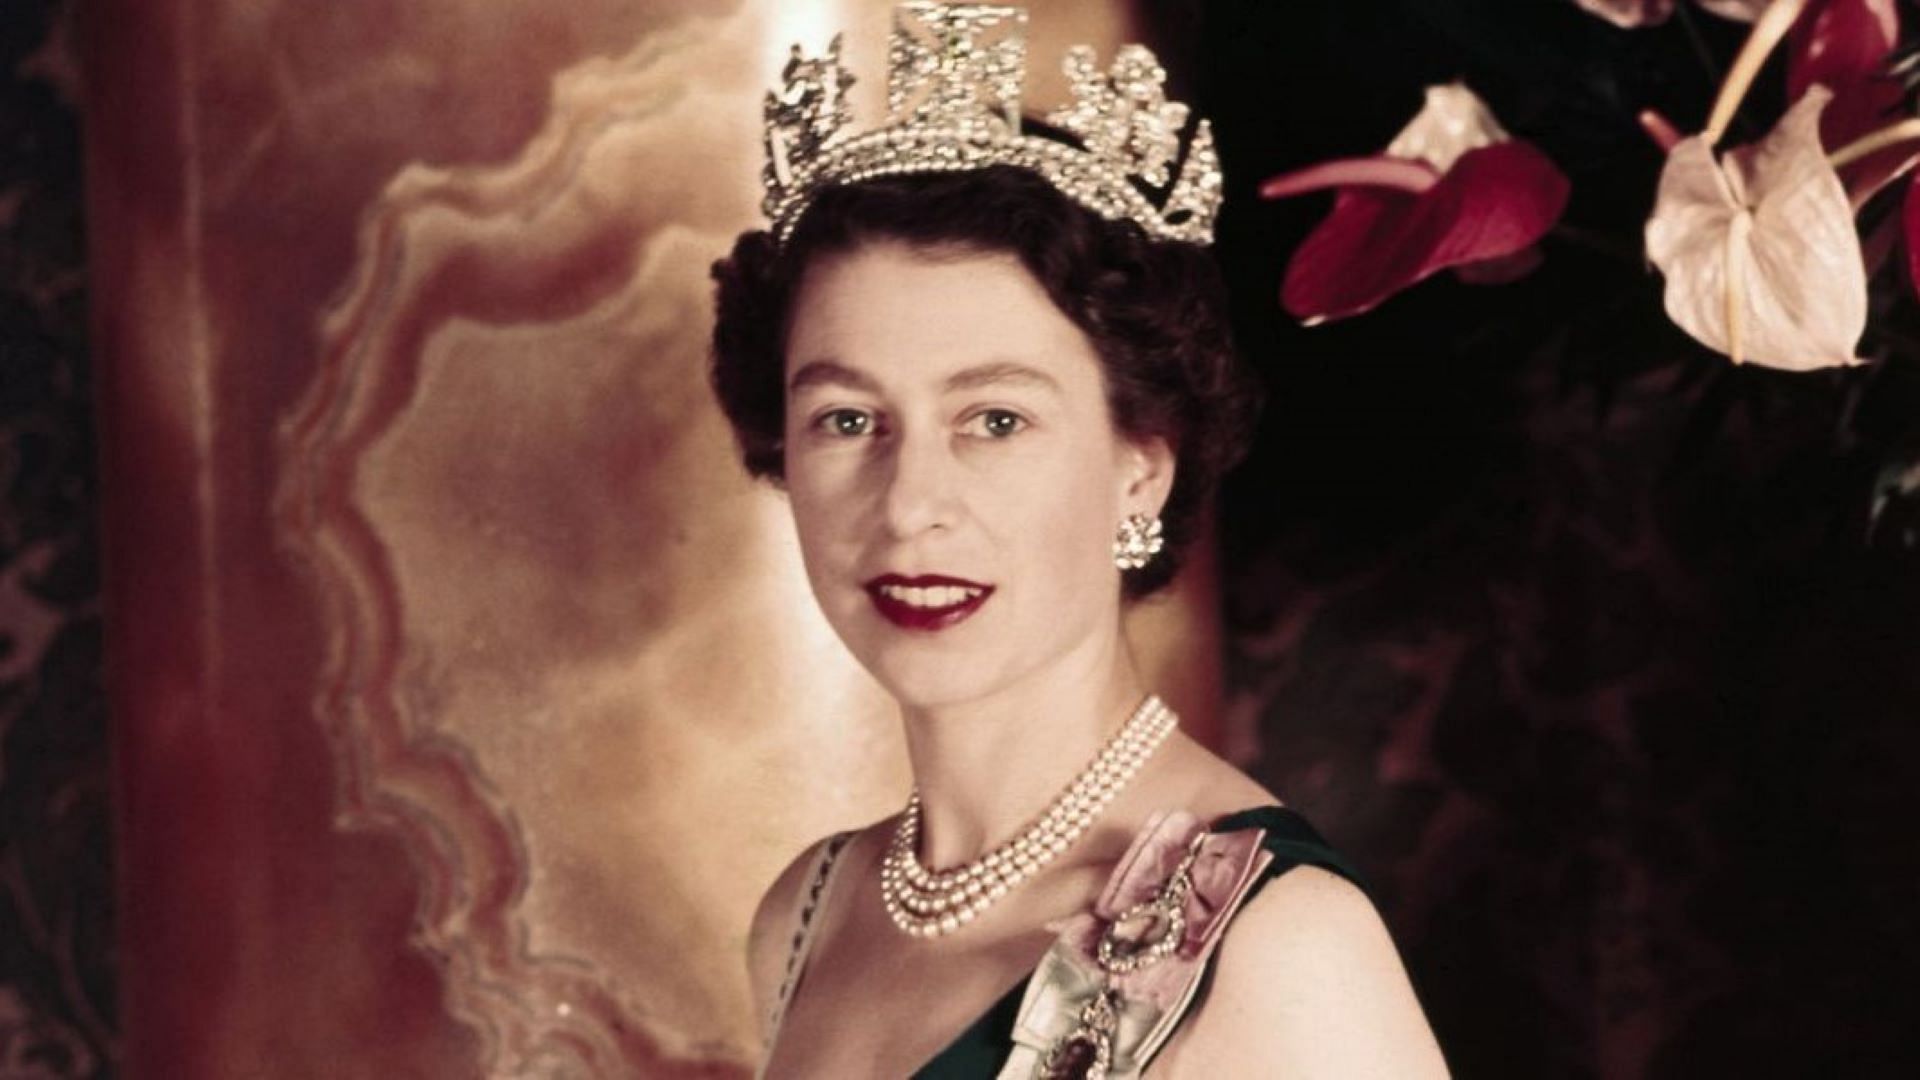 Queen Elizabeth II (Image via Getty)